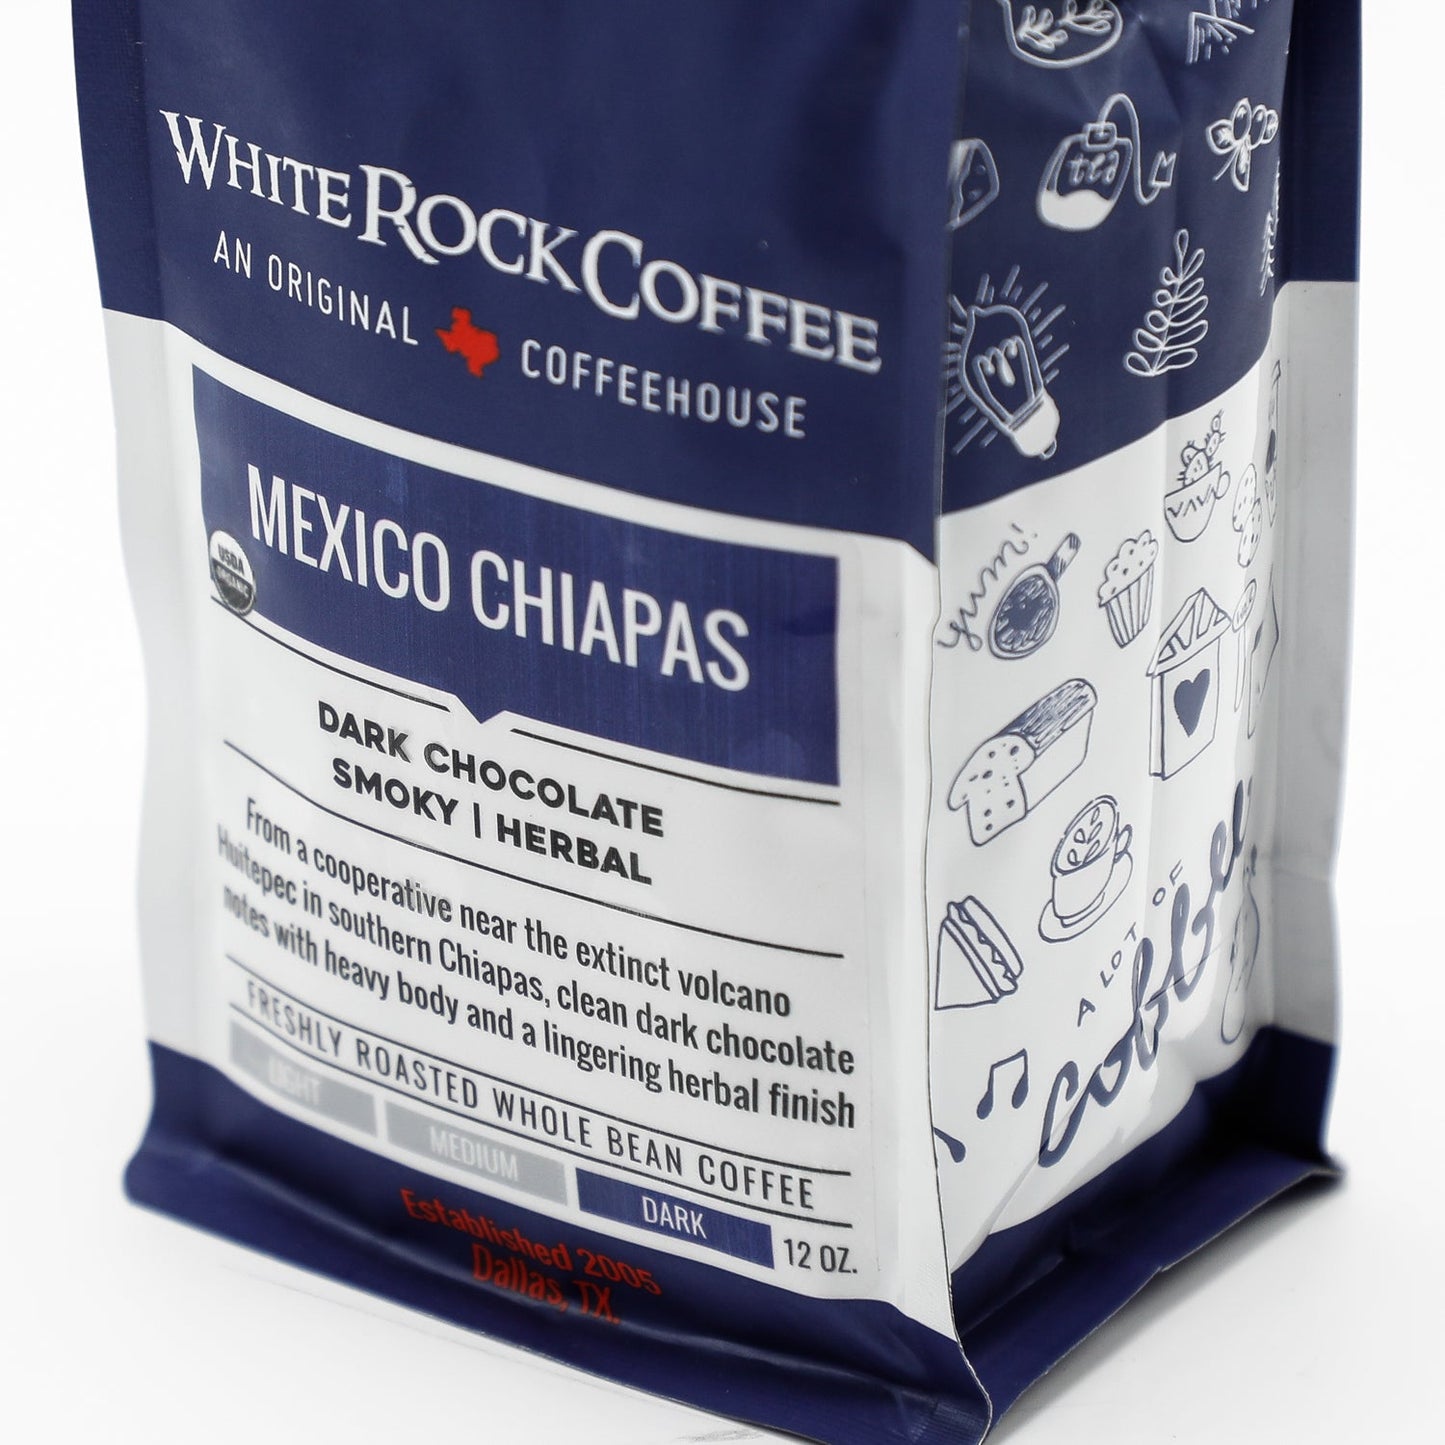 Mexico Chiapas Organic - White Rock Coffee